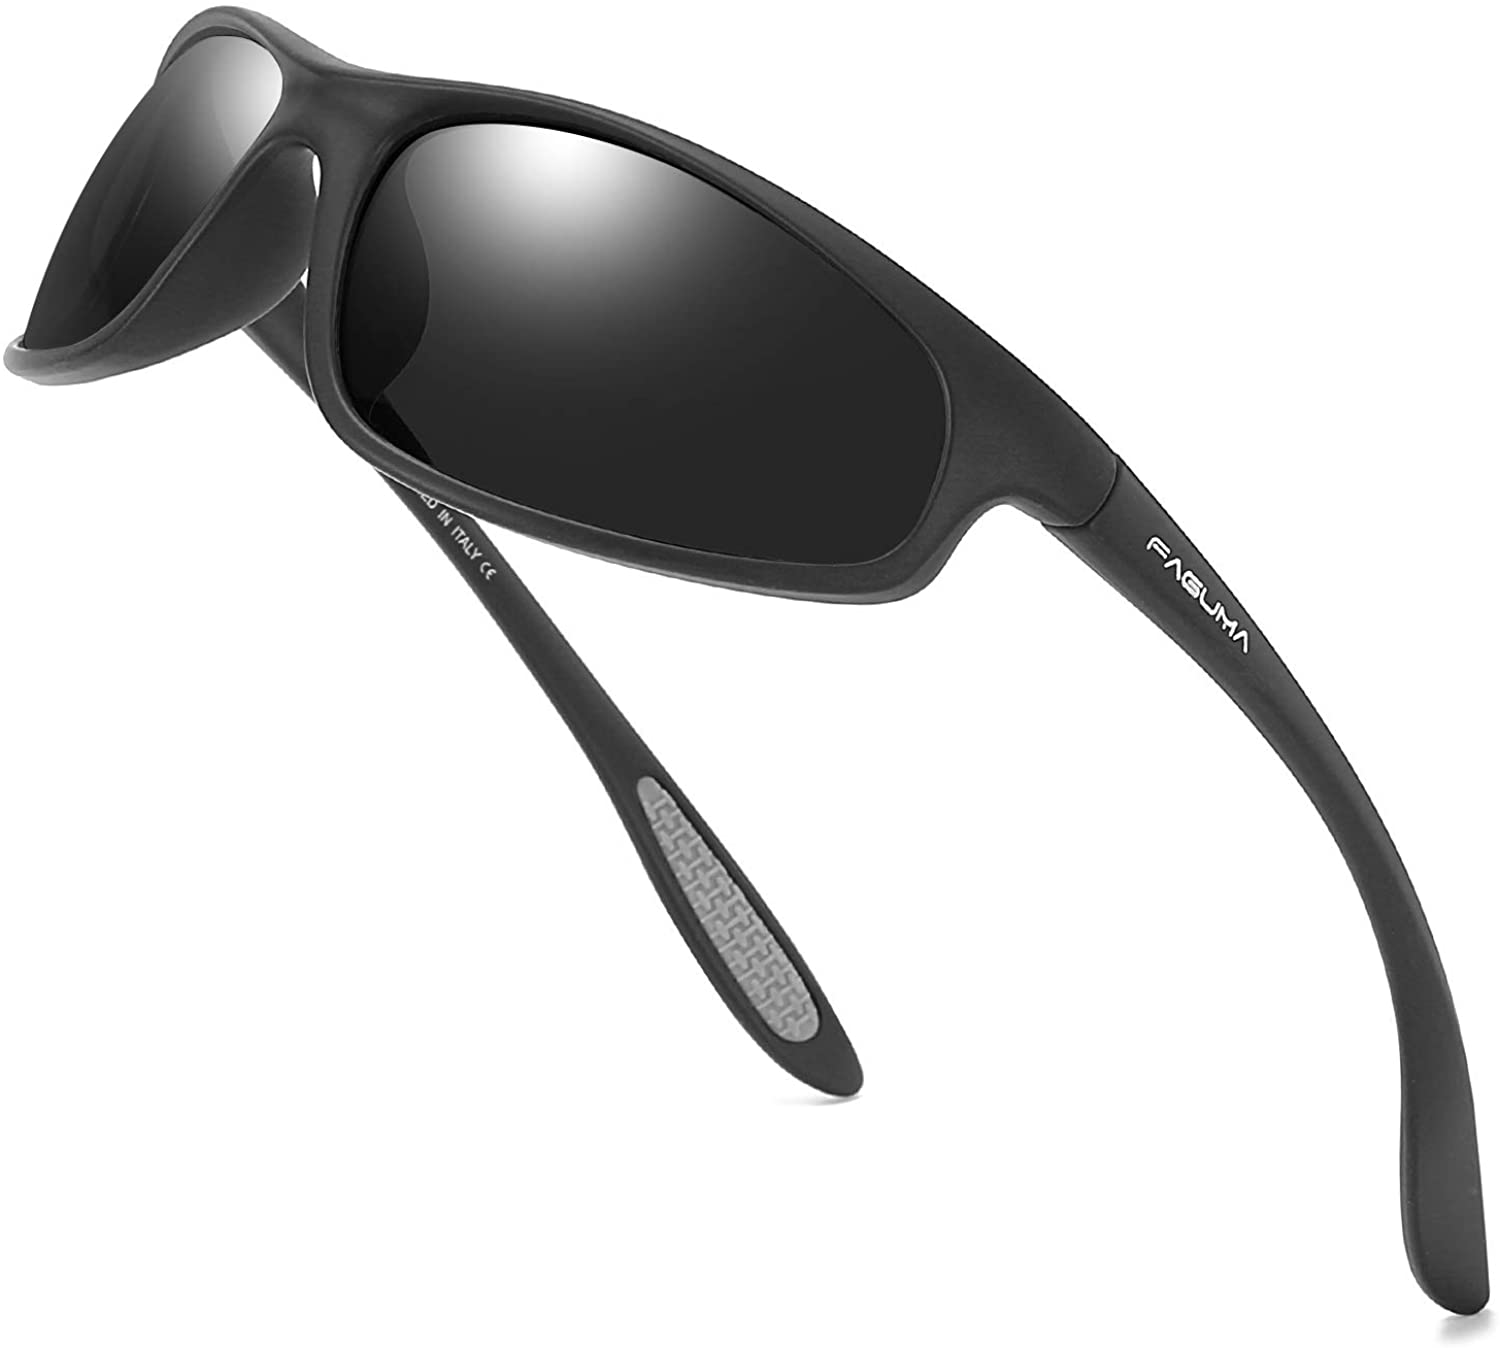 Buy FAGUMA Polarized Sports Sunglasses For Men Cycling Driving